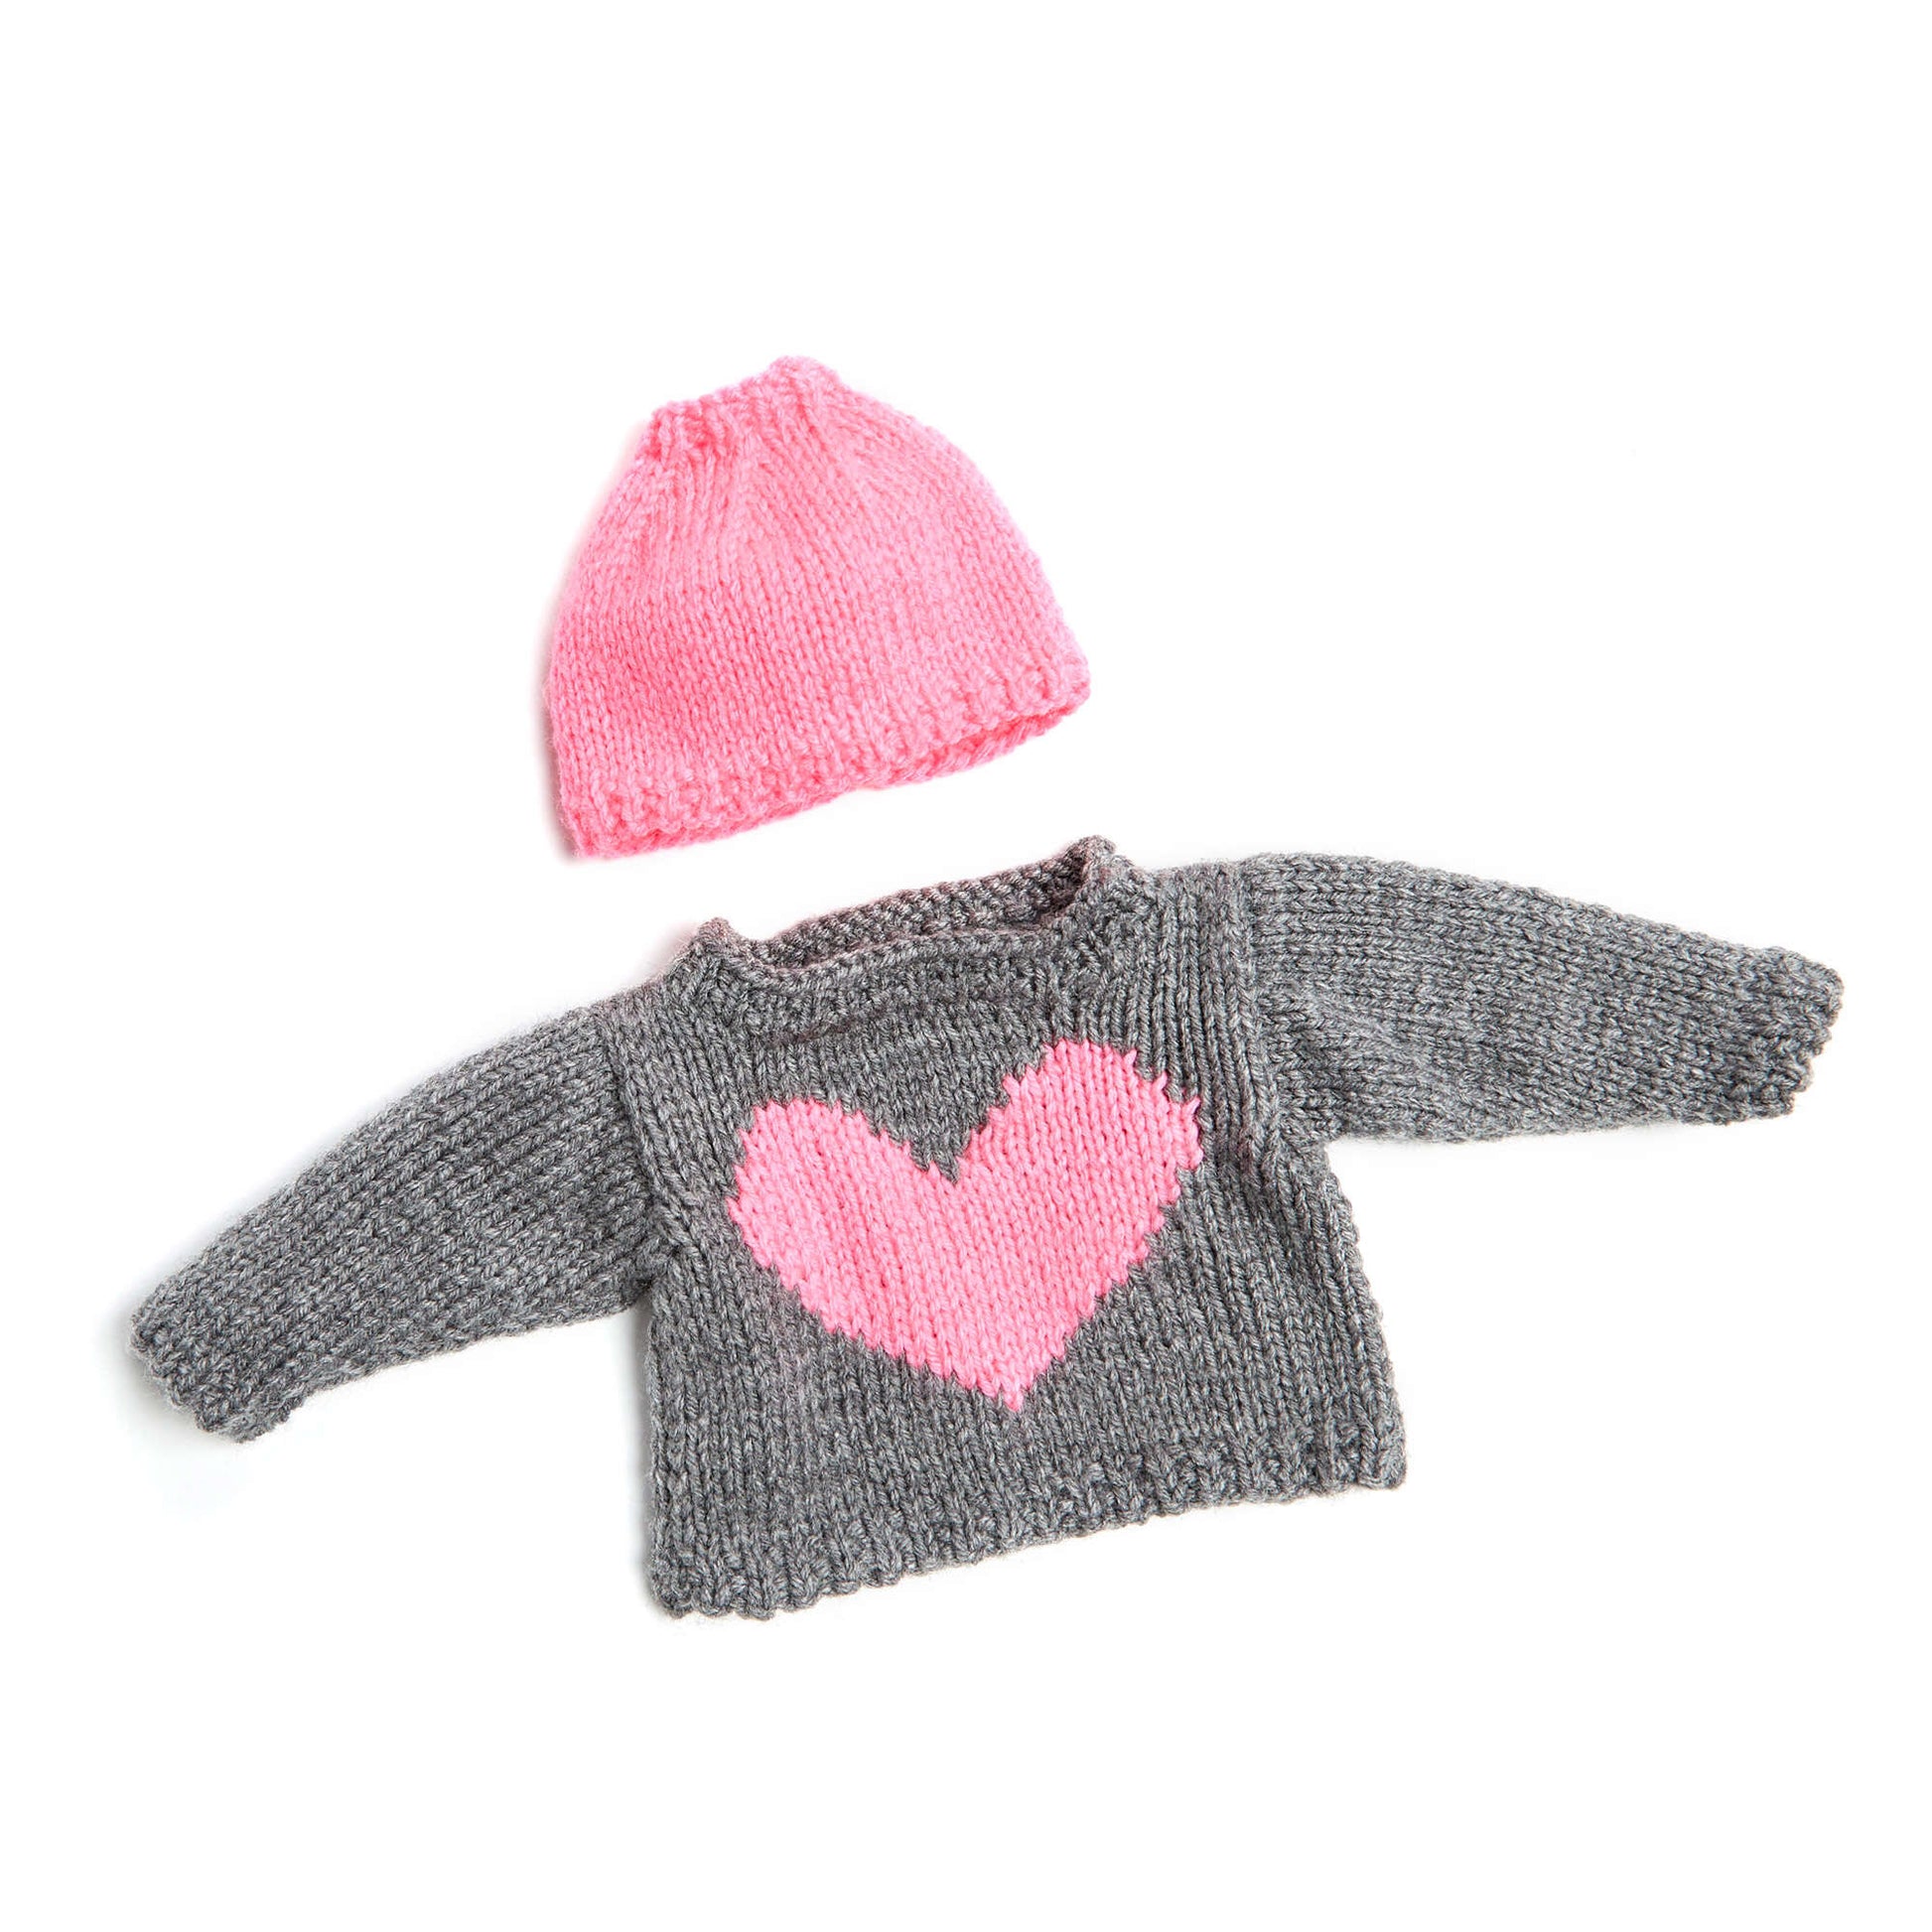 Free Red Heart Knit Love My Doll Sweater & Messy Bun Hat Pattern